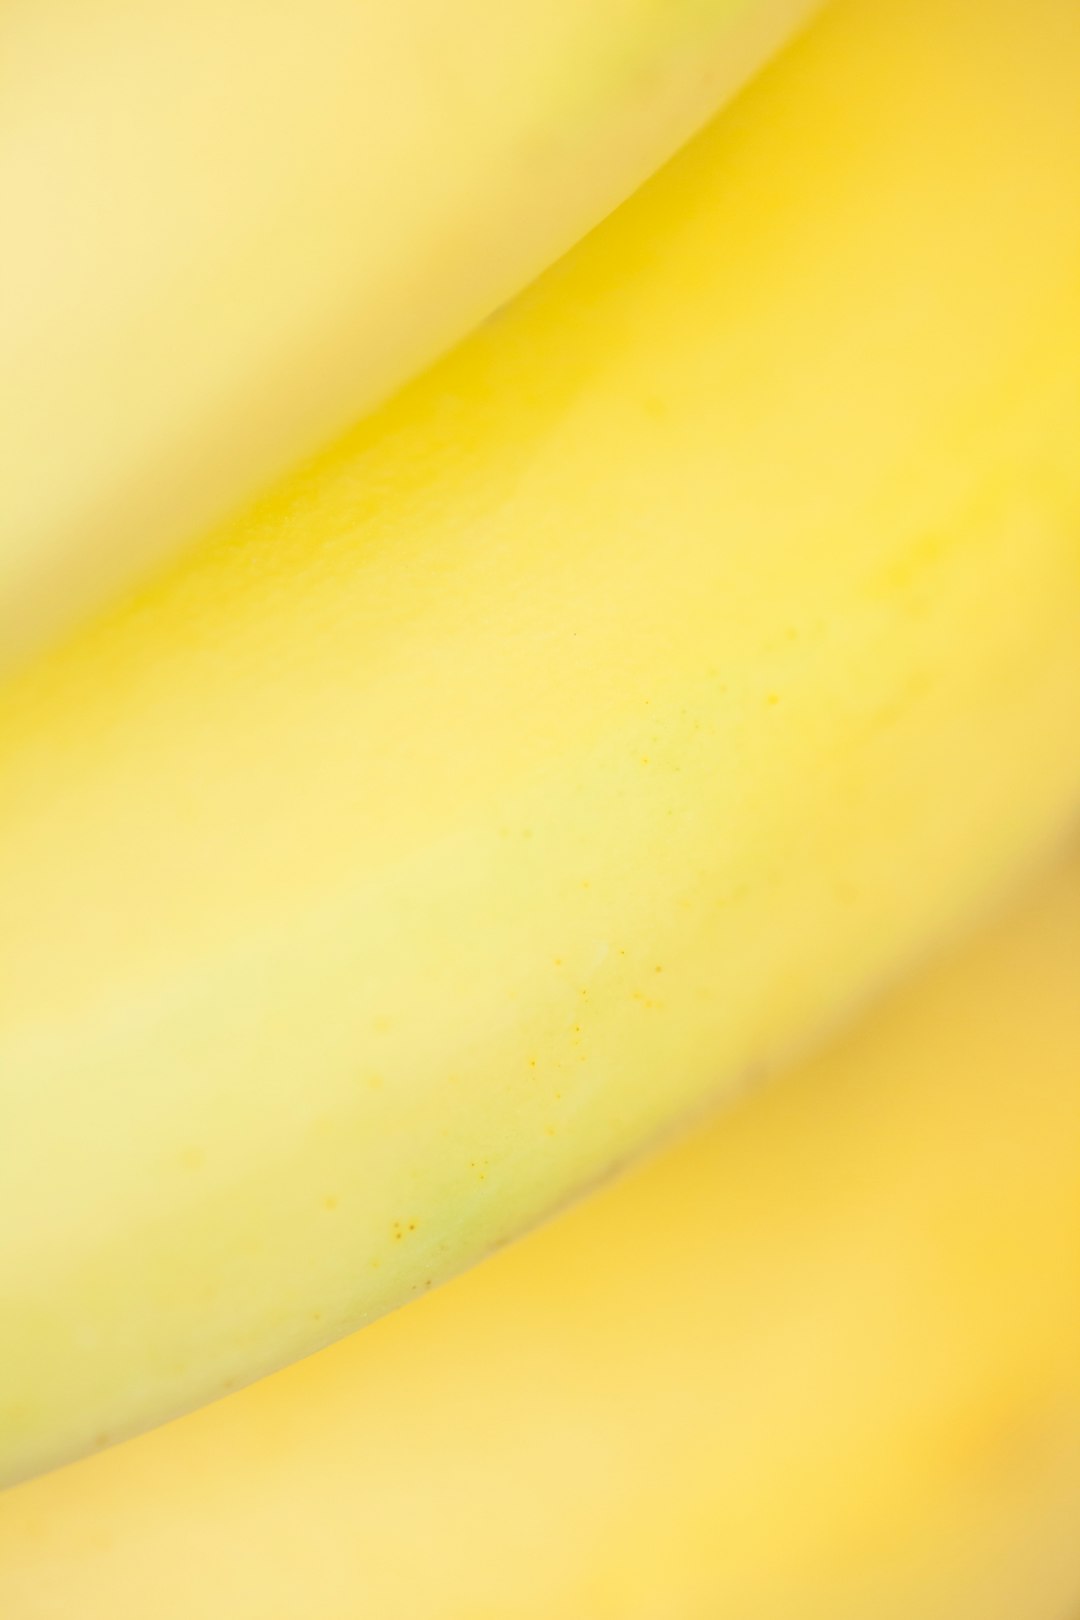 yellow banana fruit on white table